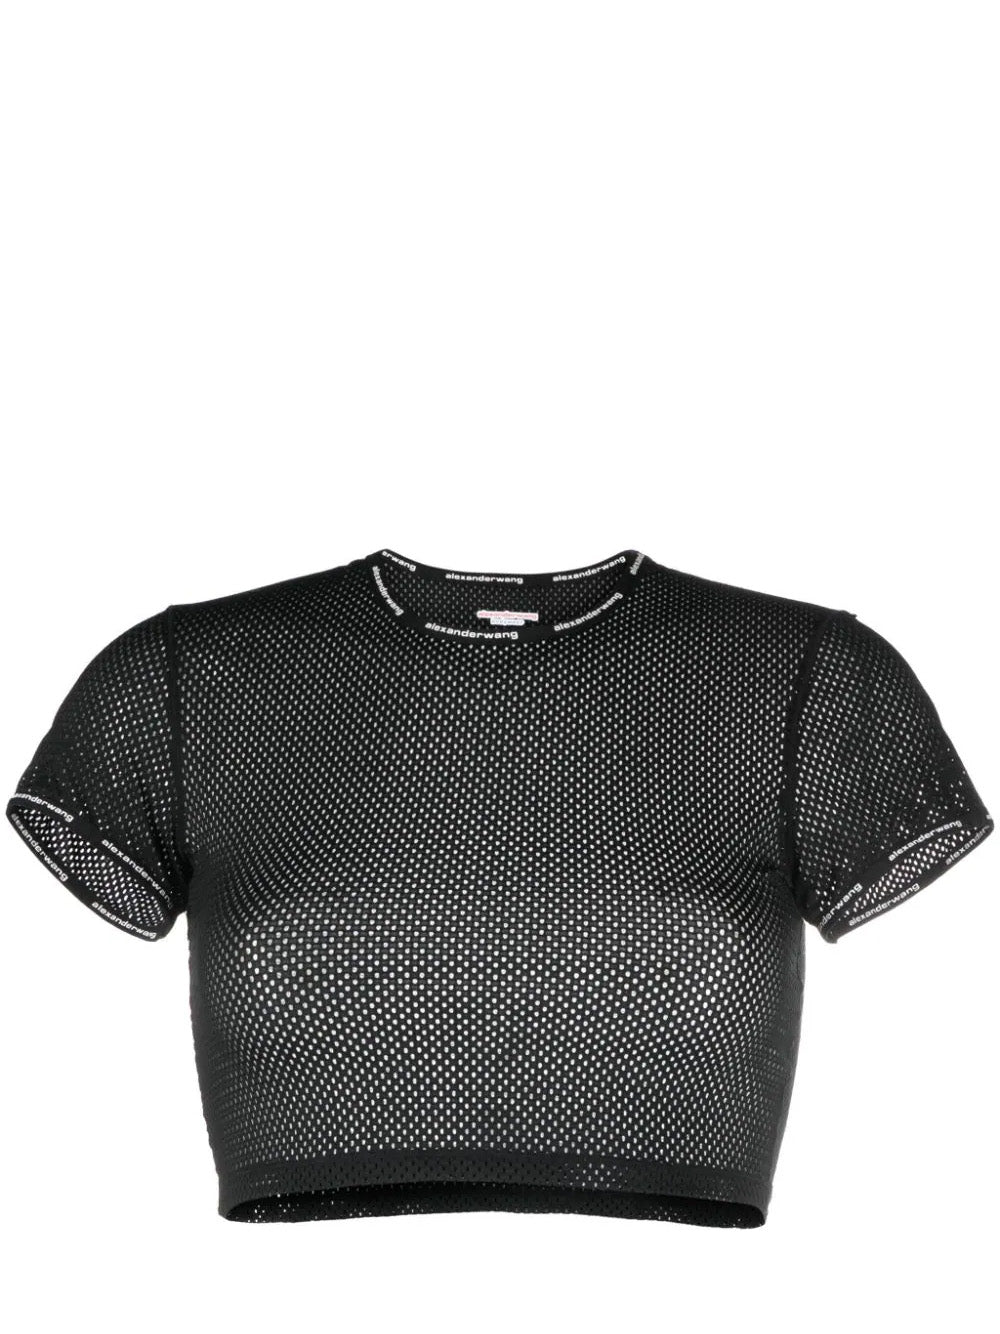       Alexander-Wang-Cropped-Tee-Shirt-With-Logo-Black-1